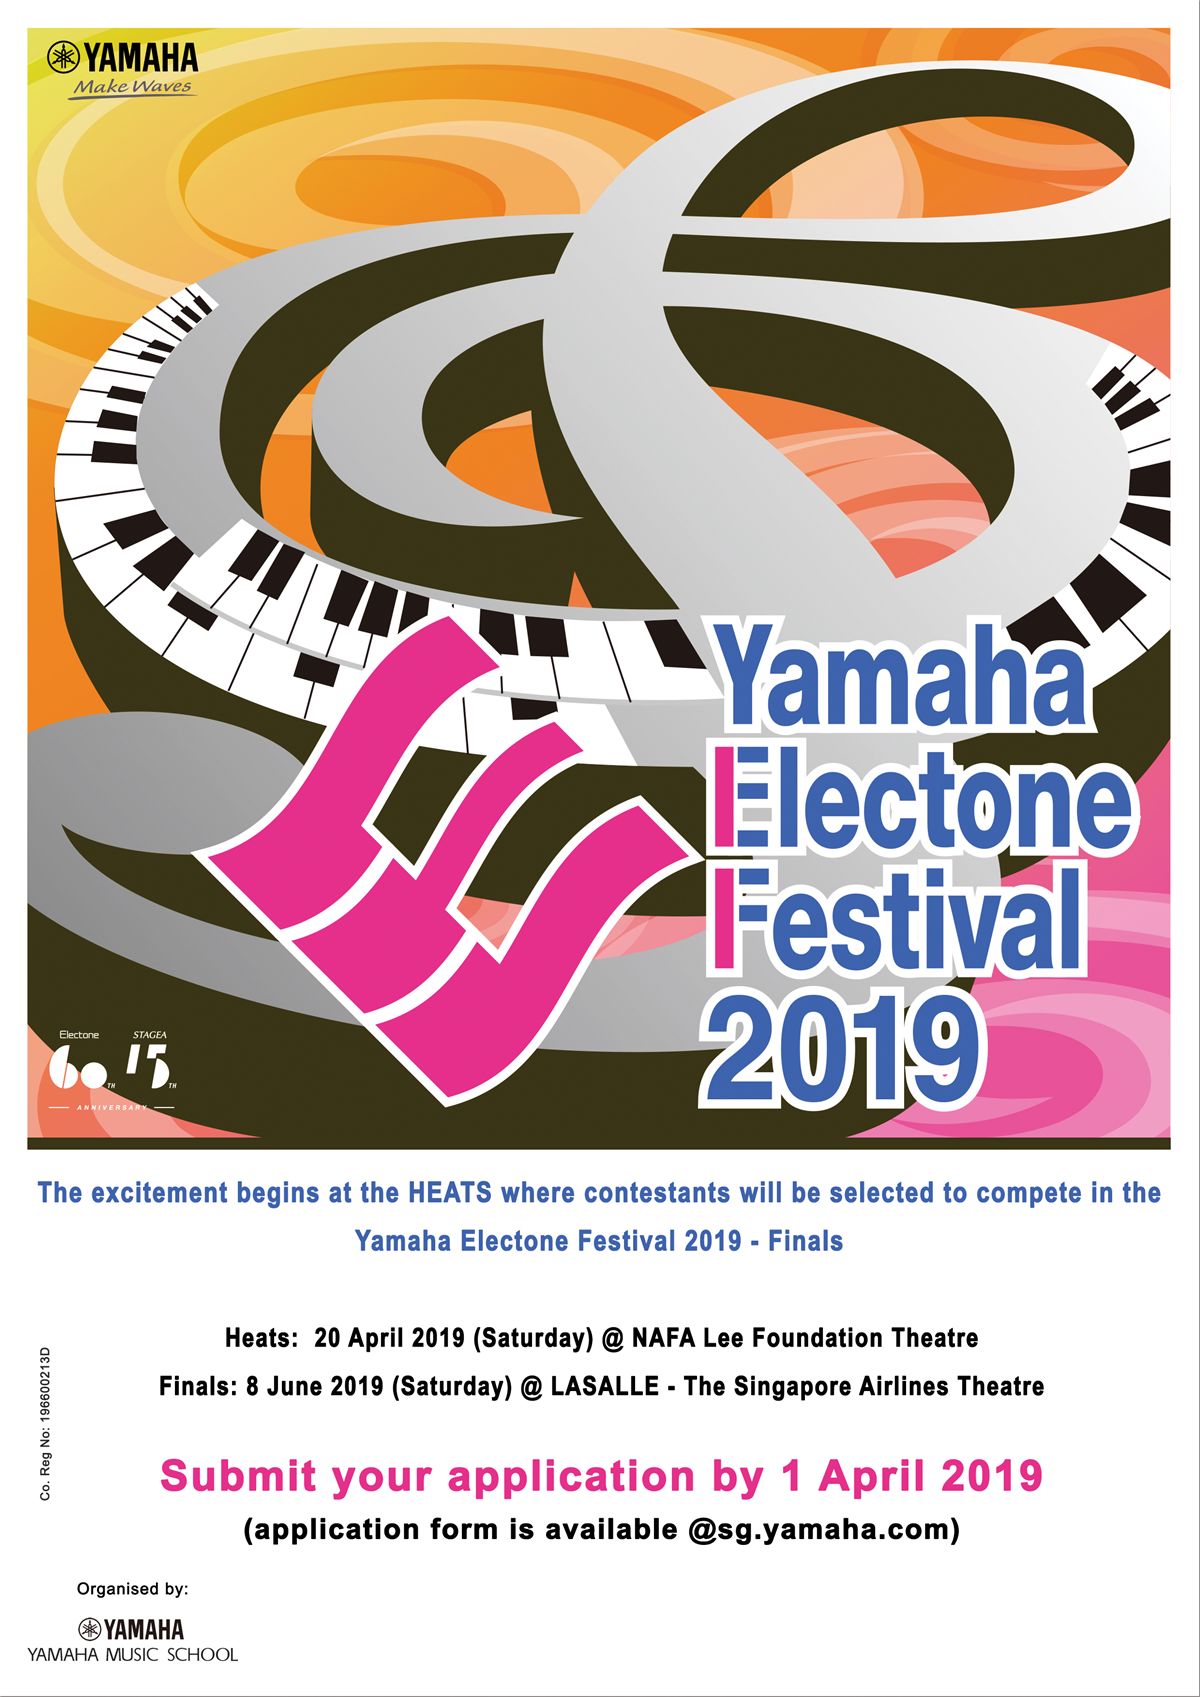 Yamaha Electone Festival 2019 now open for application - Yamaha - Singapore